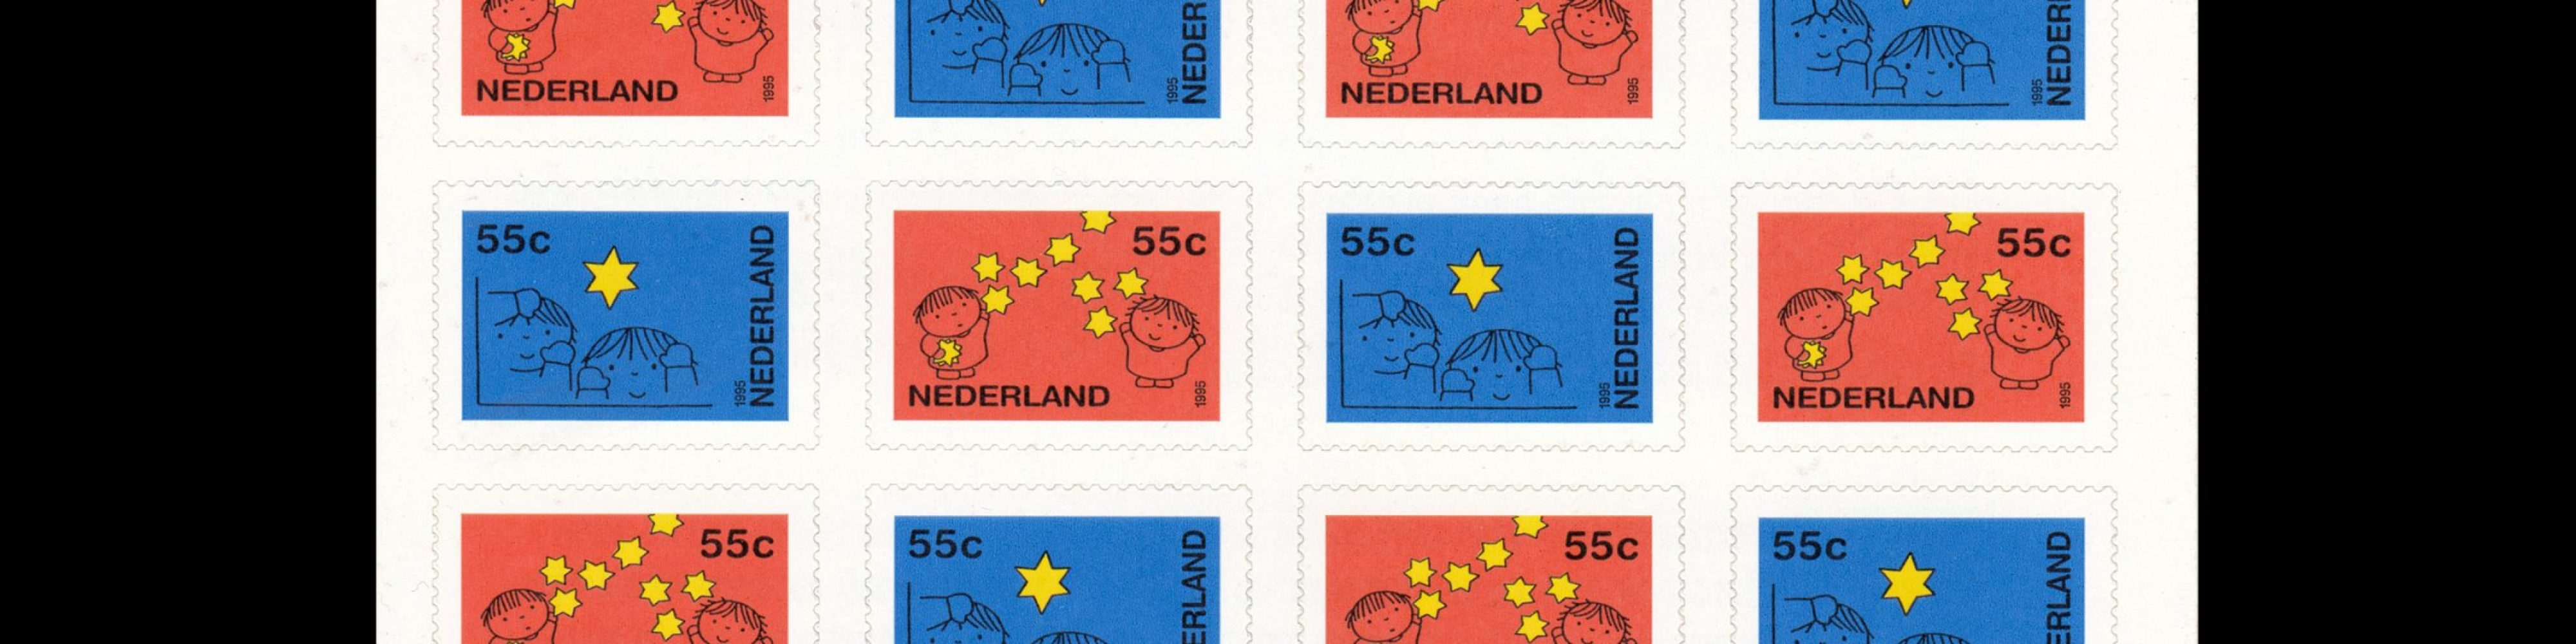 Decemberpostzegels 1995, Christmas Stamps, Sheet of 20. Designed by Dick Bruna